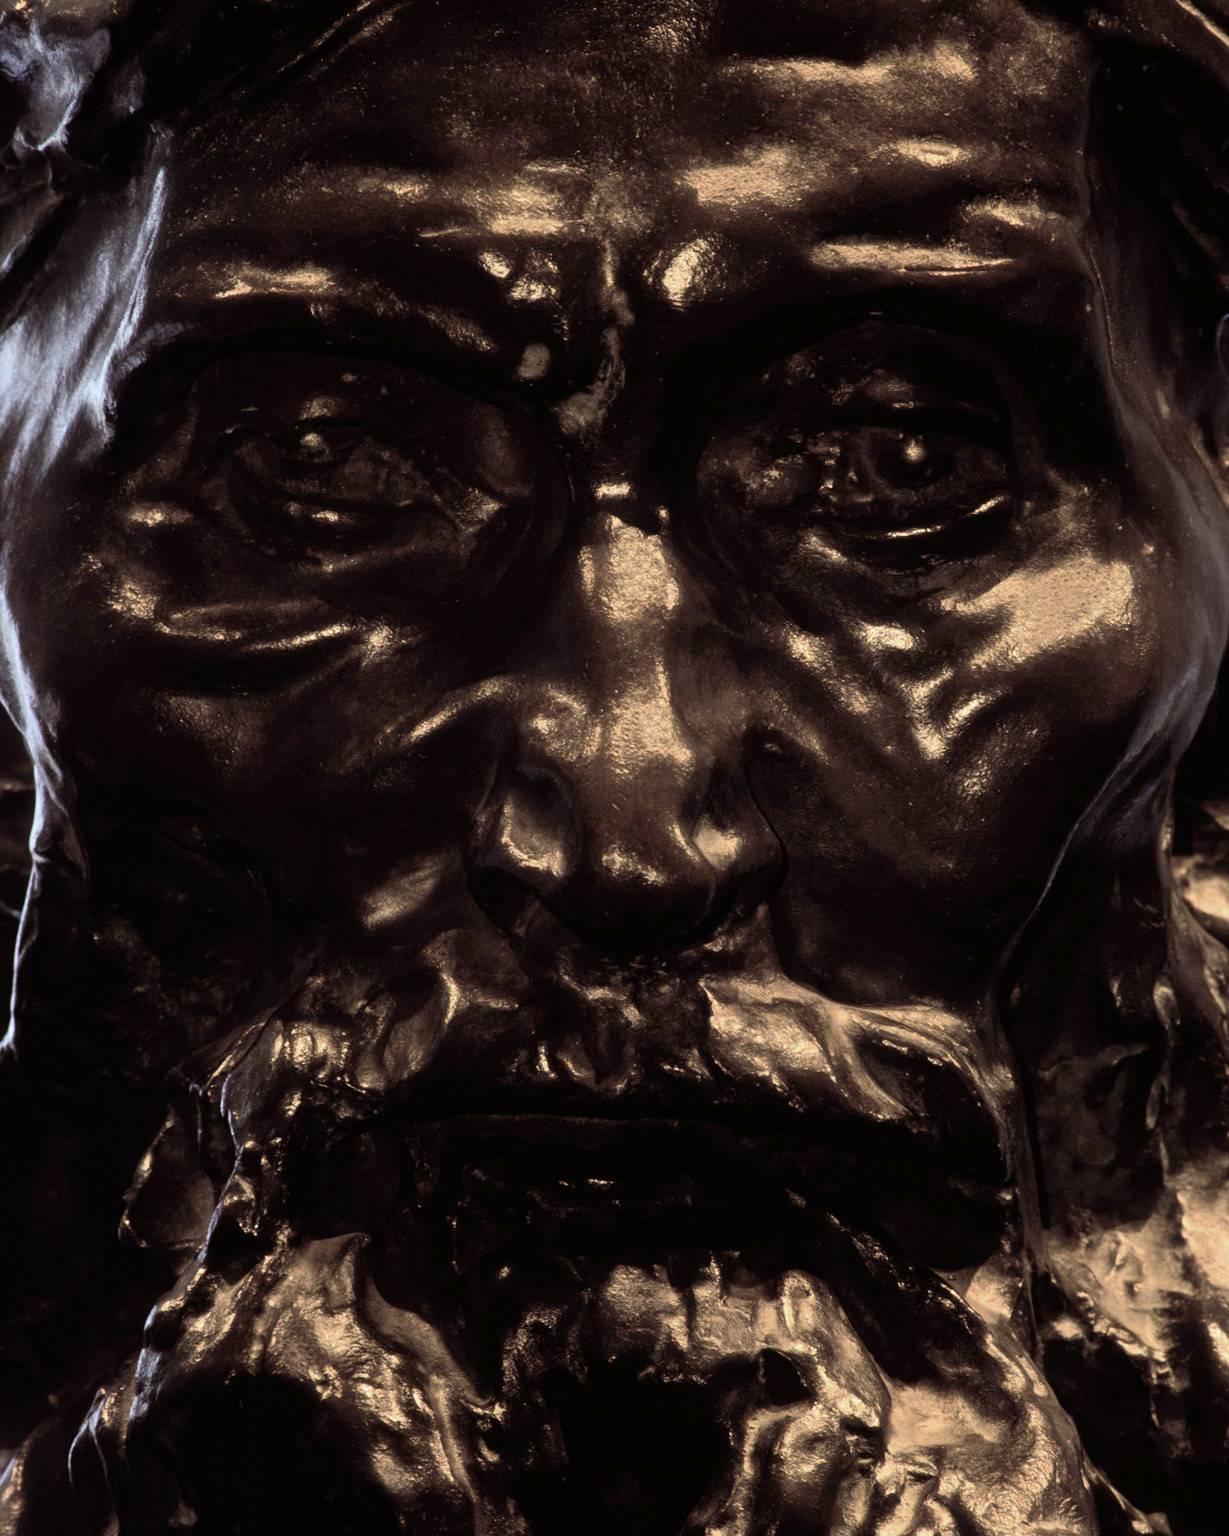 Pierre Sernet Portrait Photograph - F003, French, Bronze - Close-Up Photograph of a Bronze Sculpture by Rodin